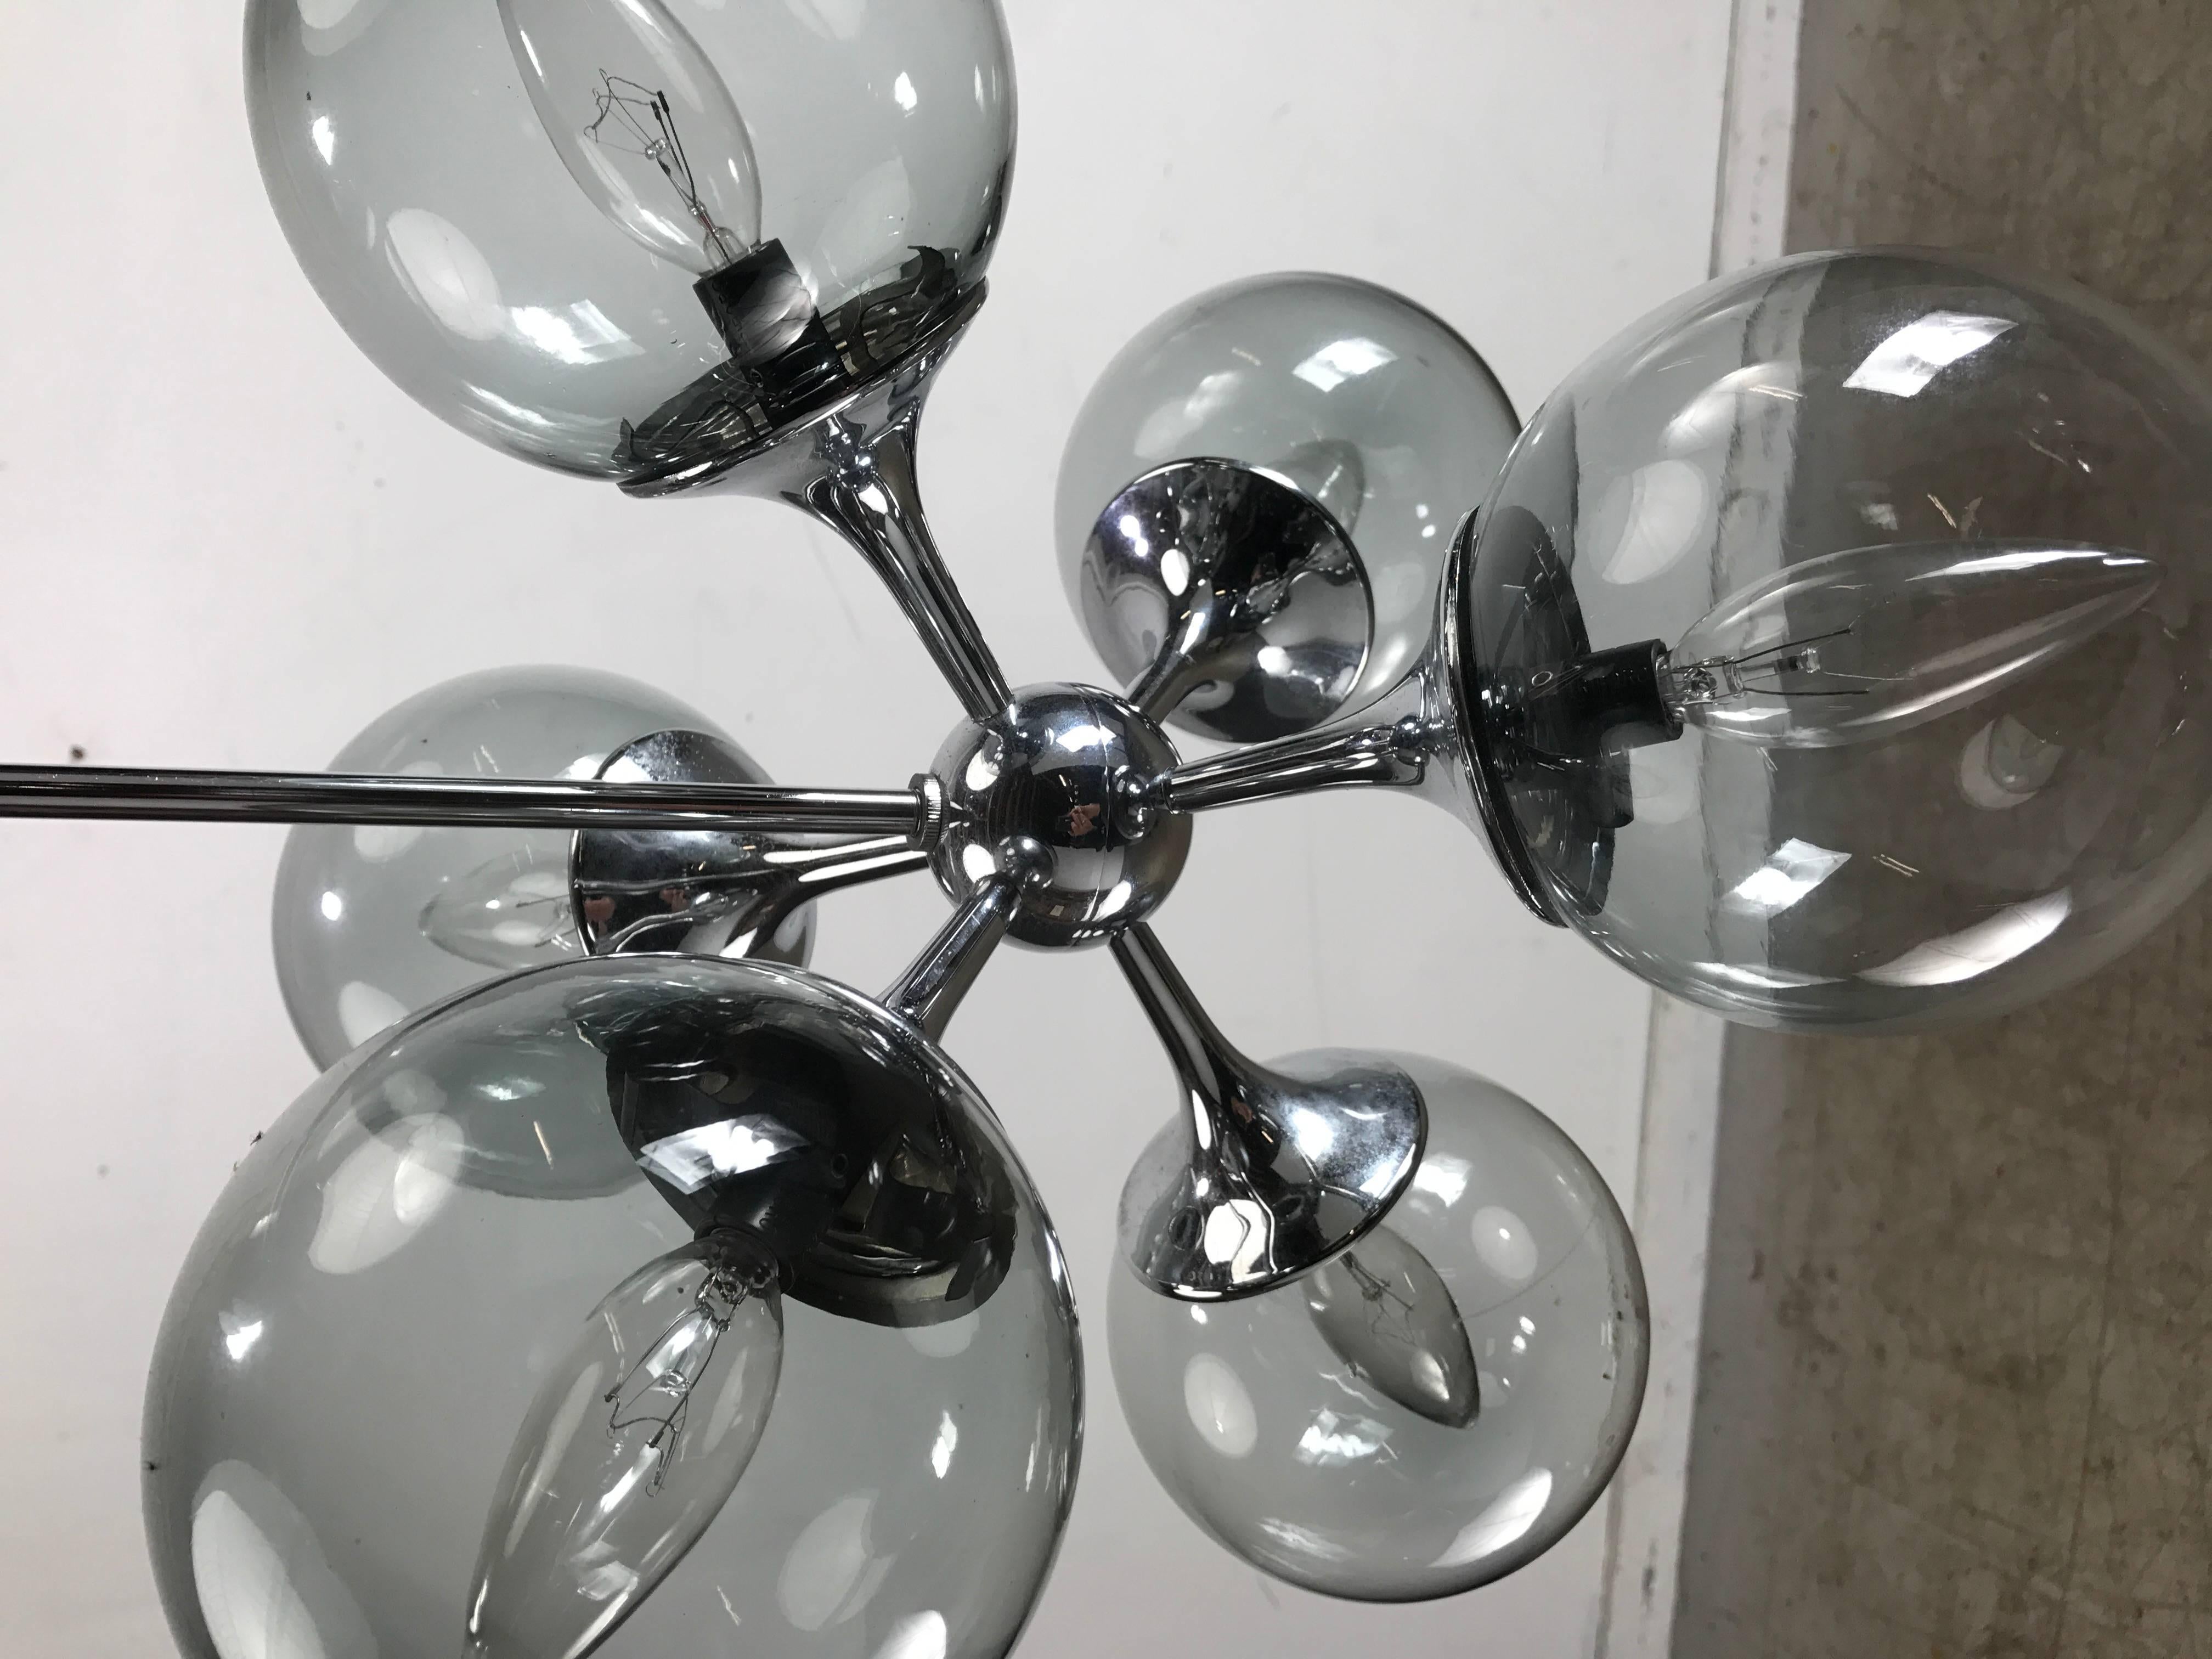 Classic Lightolier Sputnik pendant light fixture, atomic design, smoke glass globes. Retains original early Lightolier paper label.